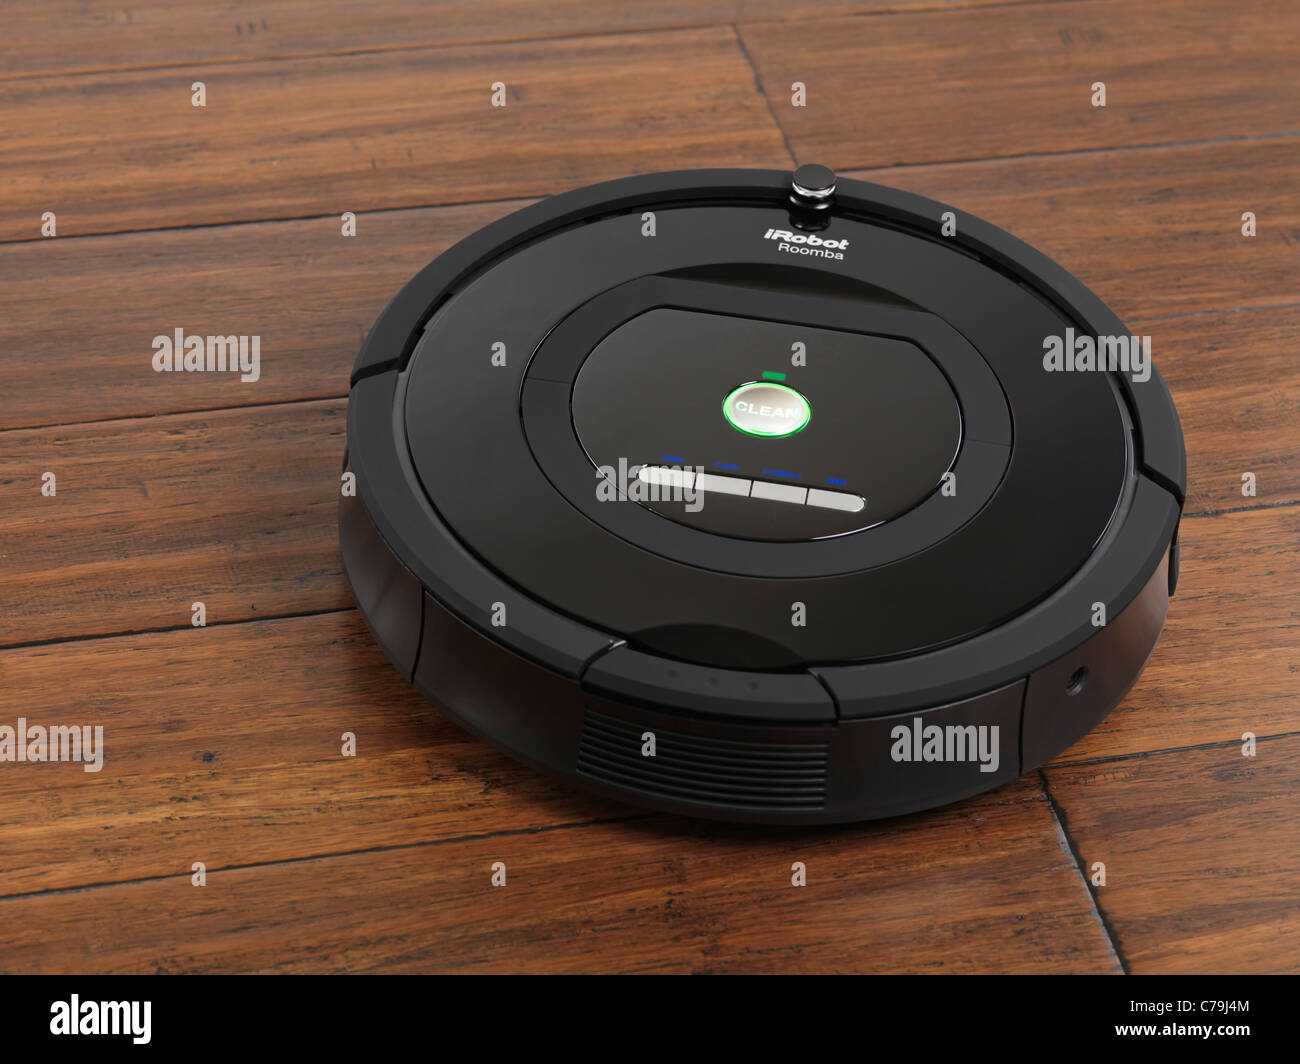 iRobot Roomba 770 household vacuum cleaning robot on hardwood floor Stock  Photo - Alamy